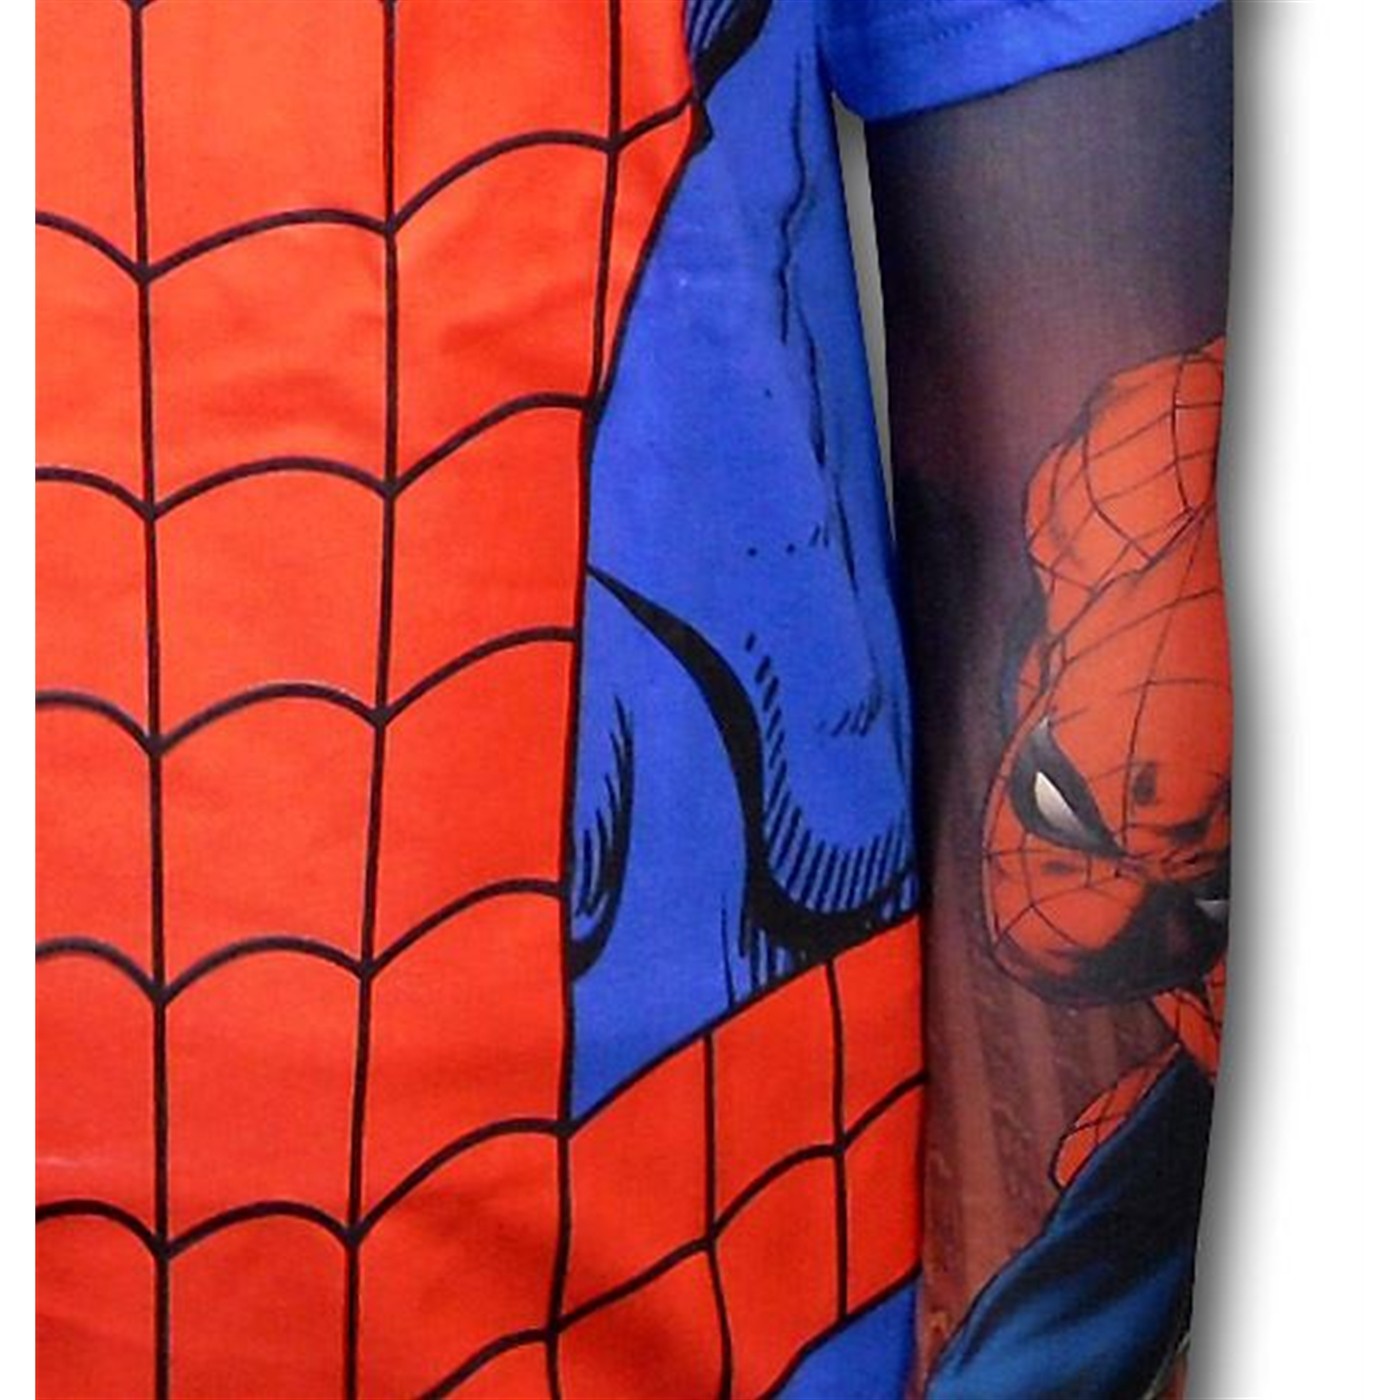 Spiderman Nylon Tattoo Sleeves- 2 Pack